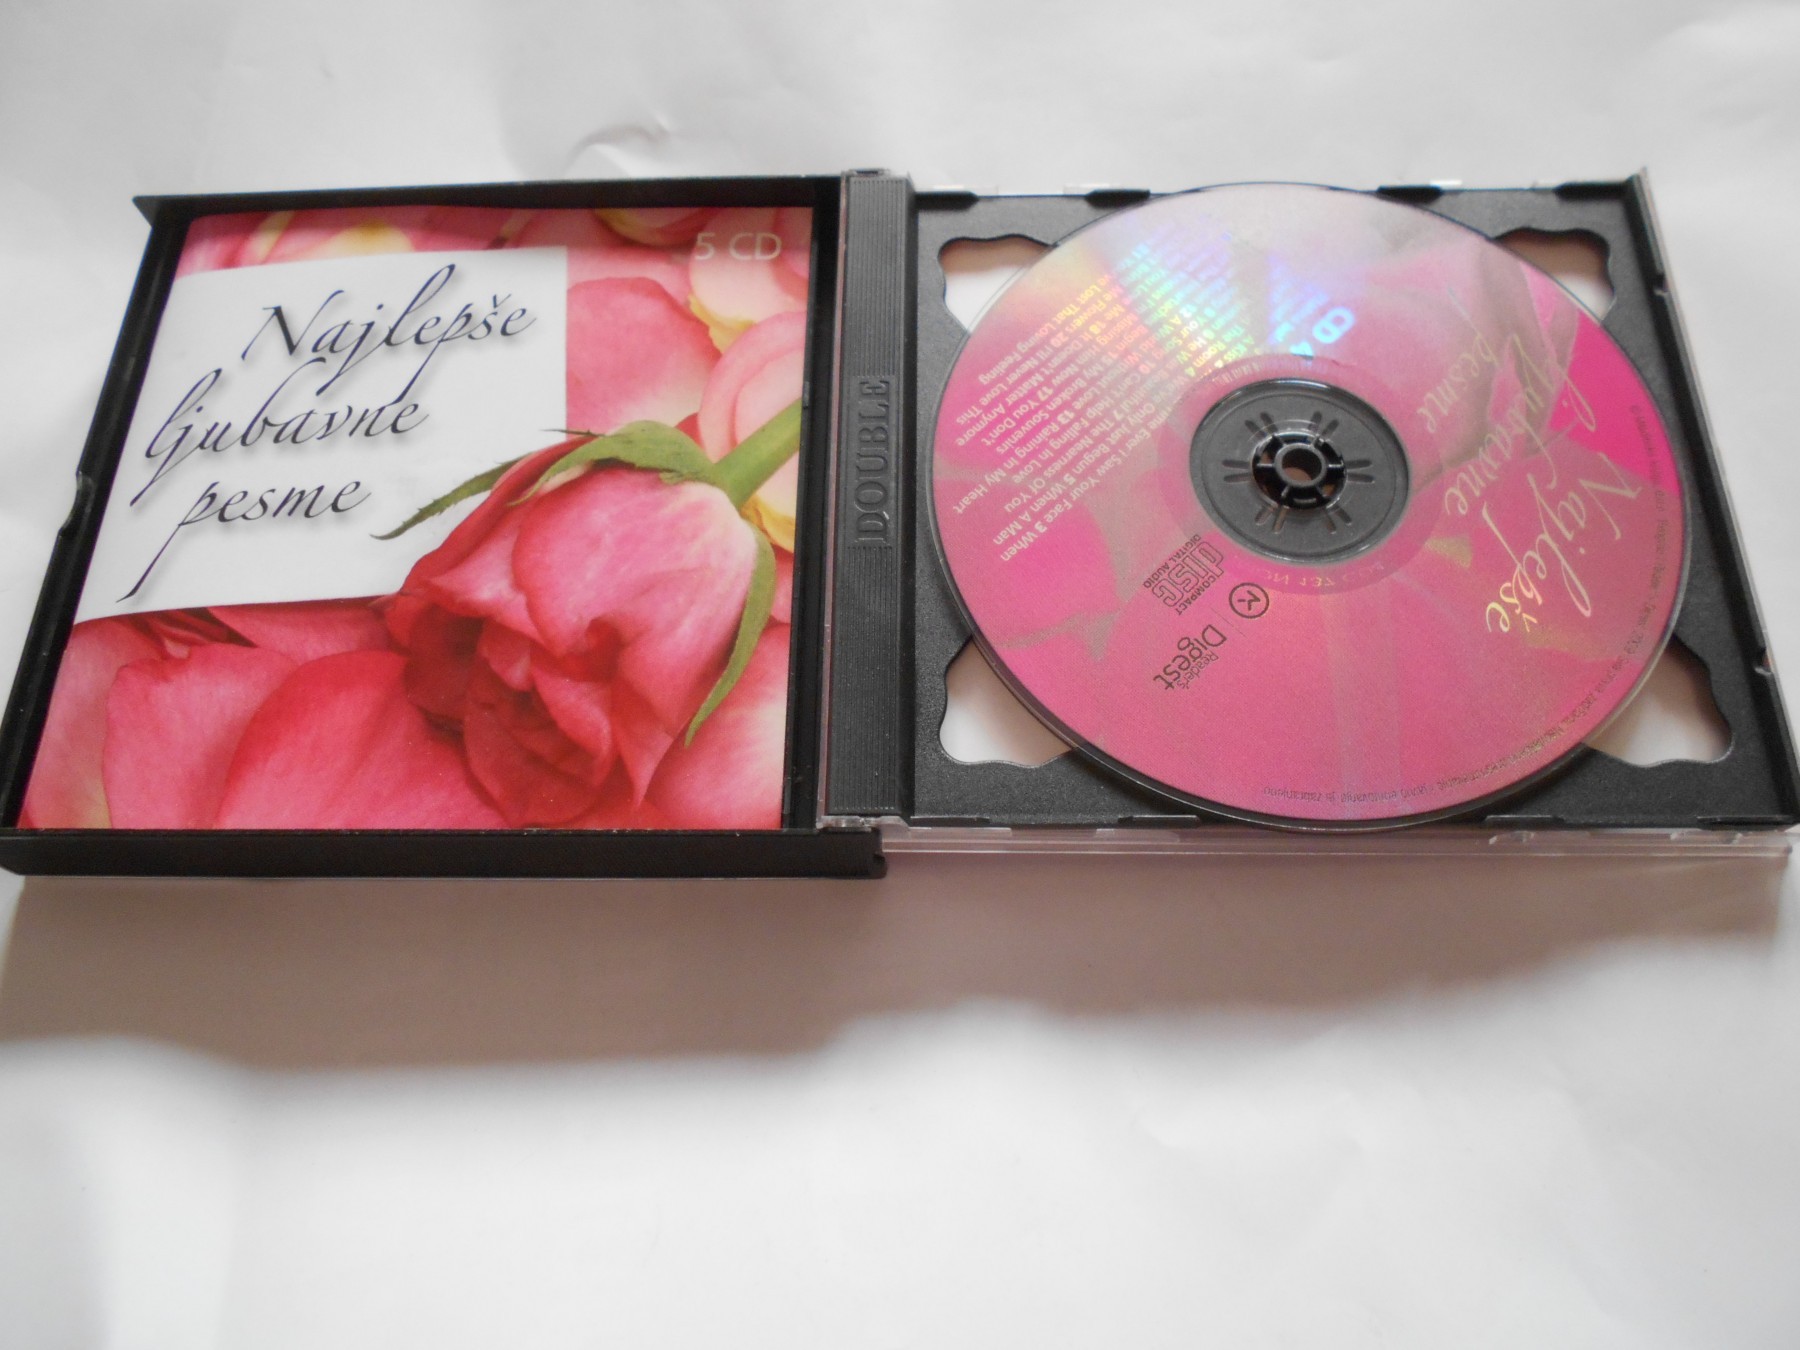 Pjesme ljubavne 2 cd box